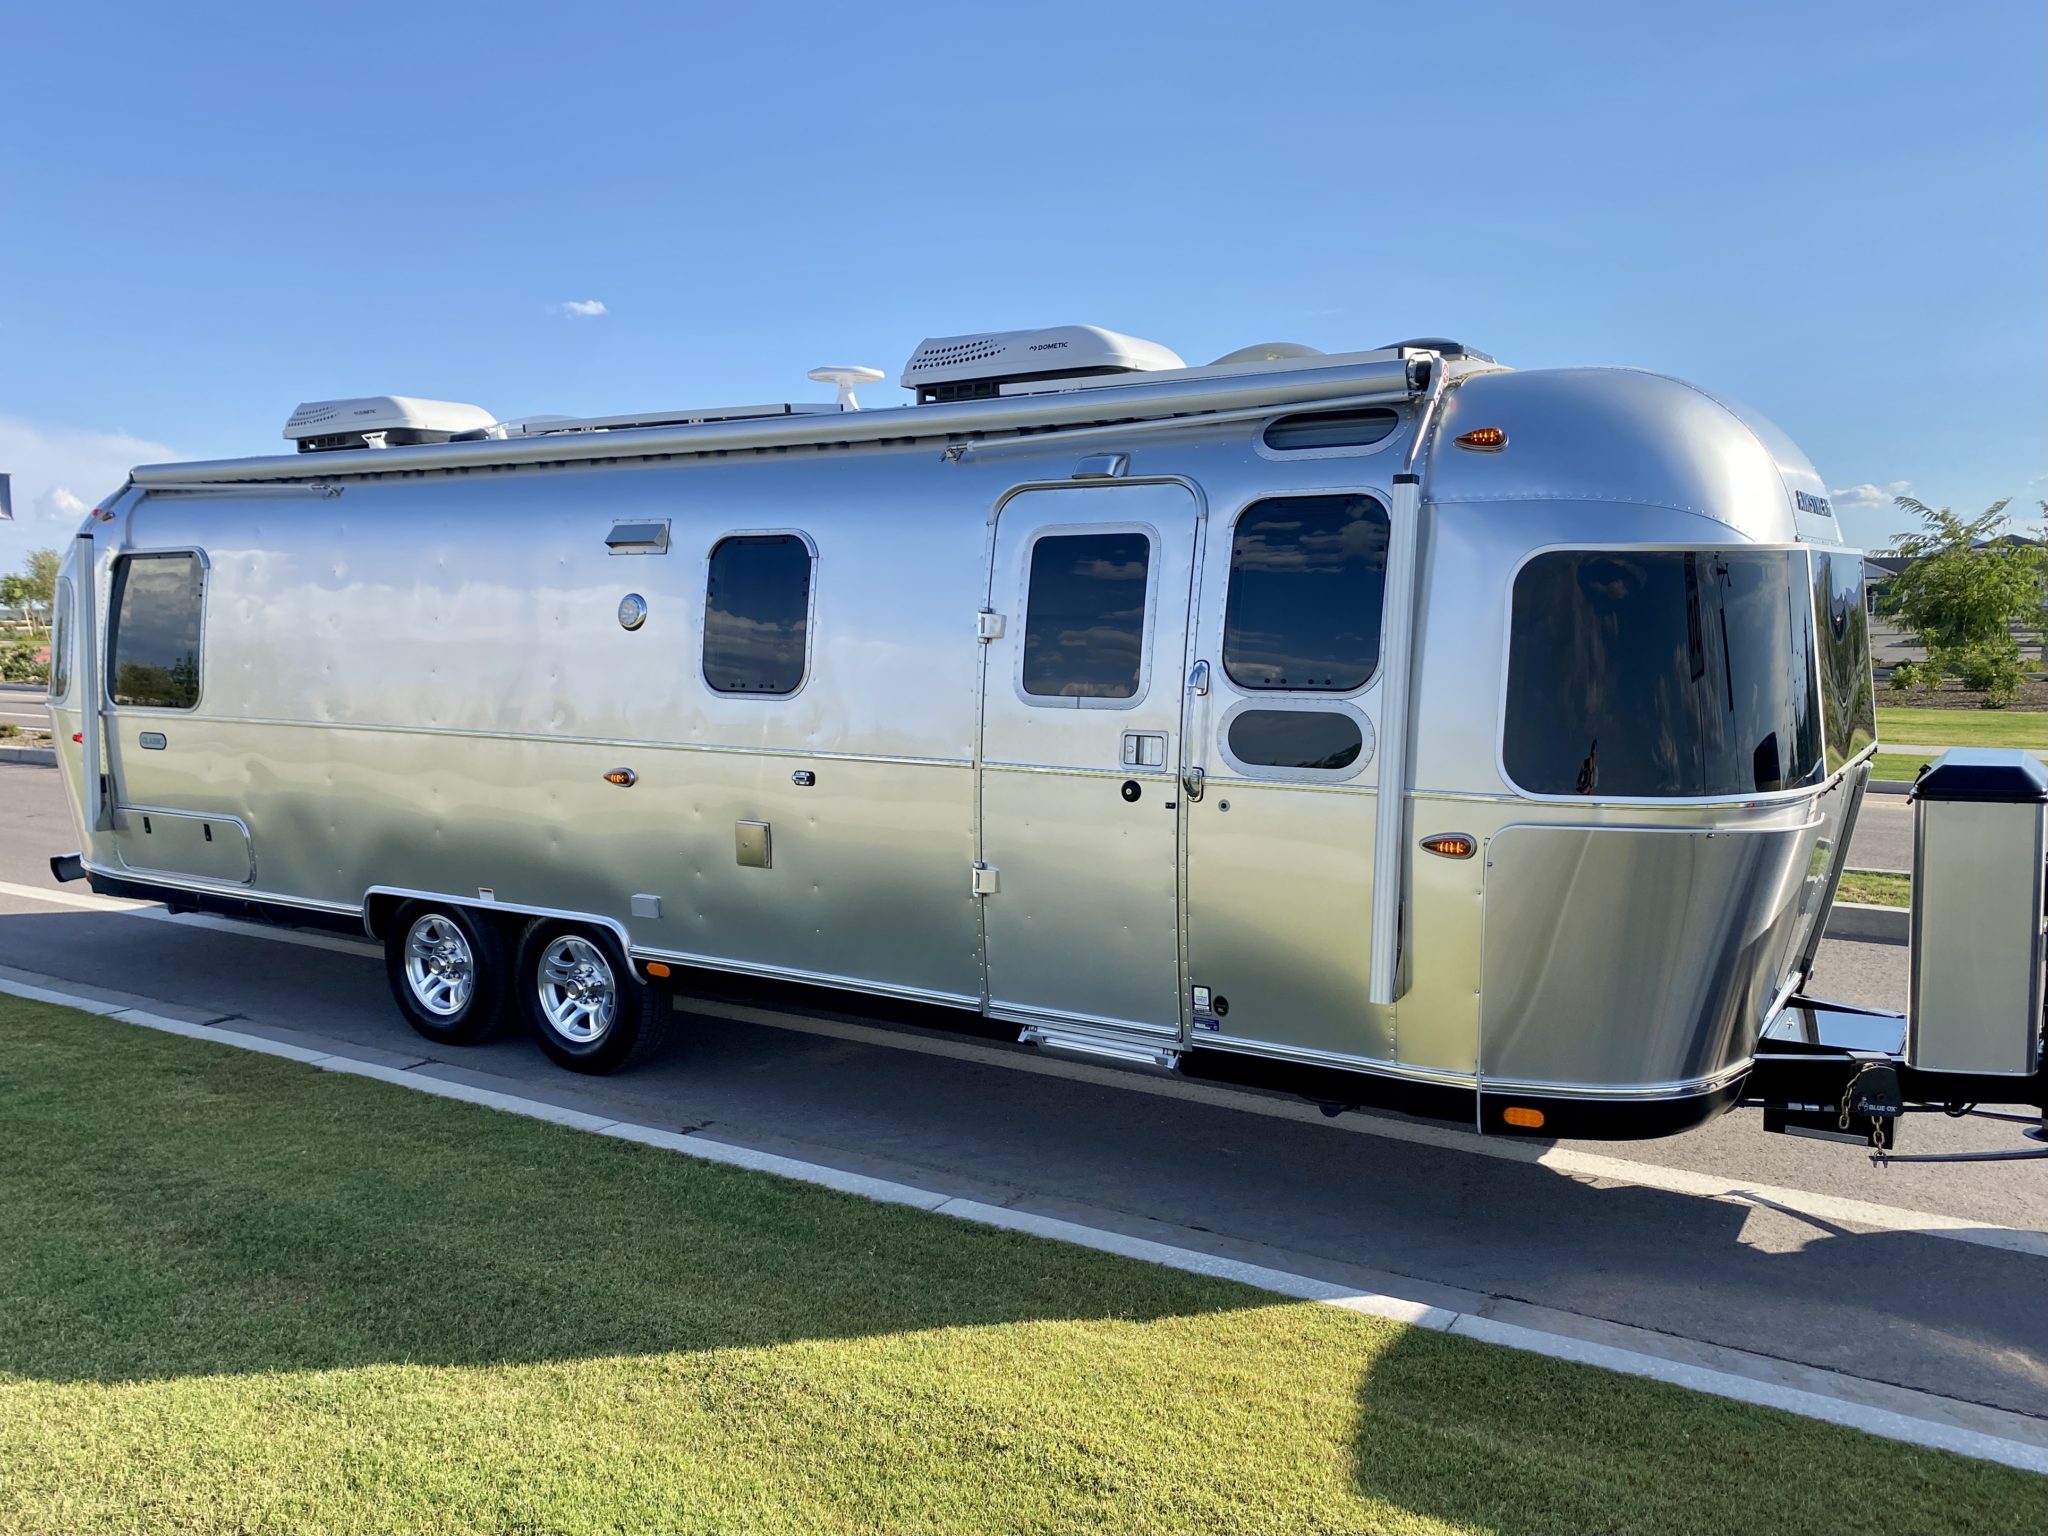 30 ft travel trailer for sale